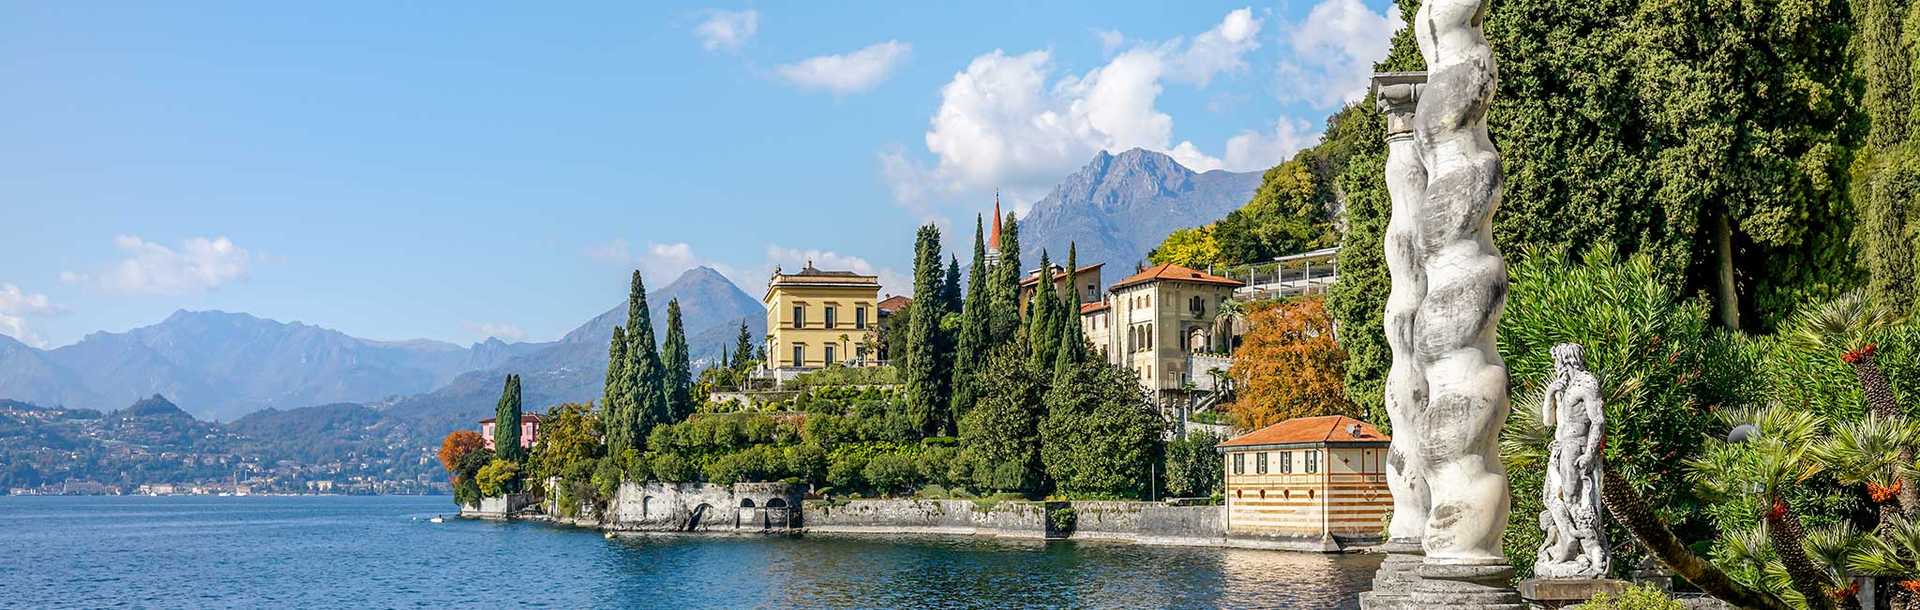 Old Town Varena on the coast of Lake Como, Italy